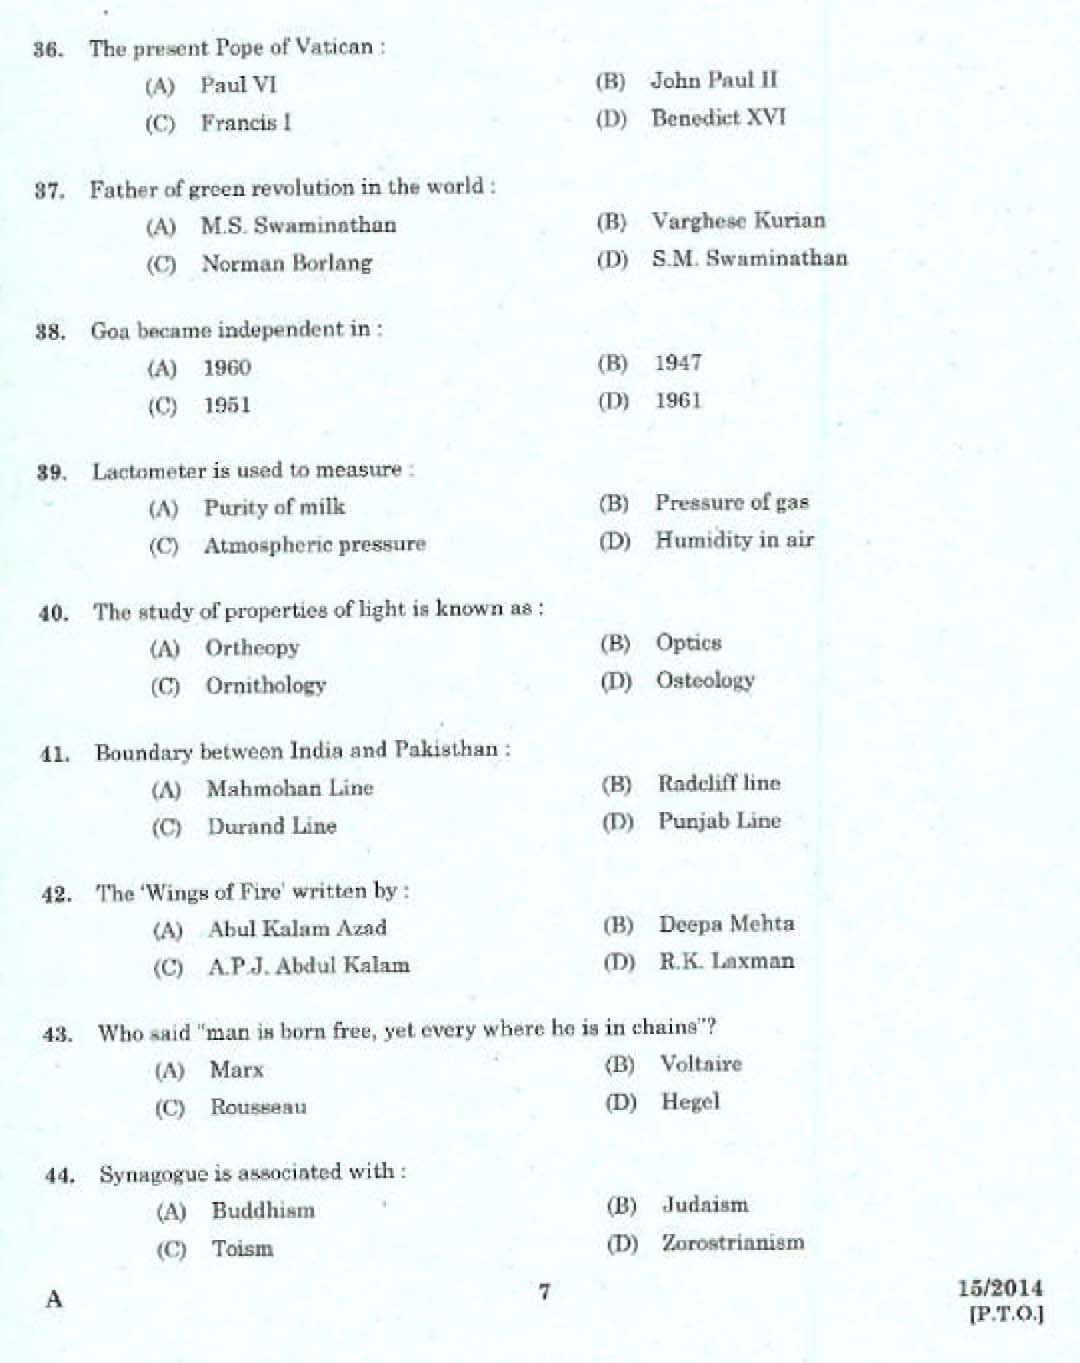 Kerala LD Typist Exam 2014 Question Paper Code 152014 5